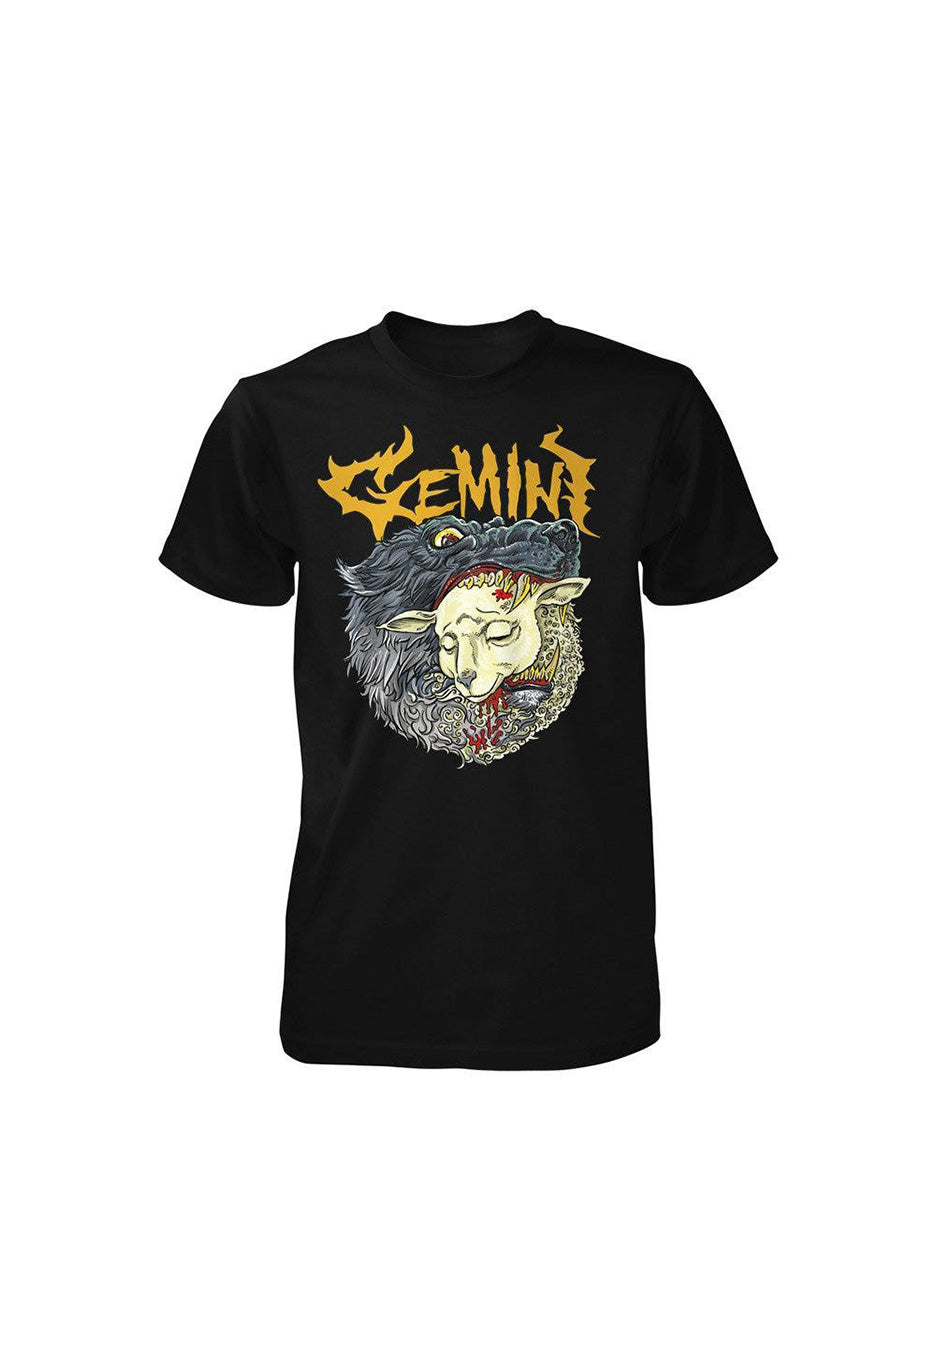 Nuclear Blast - Zodiak Gemini - T-Shirt